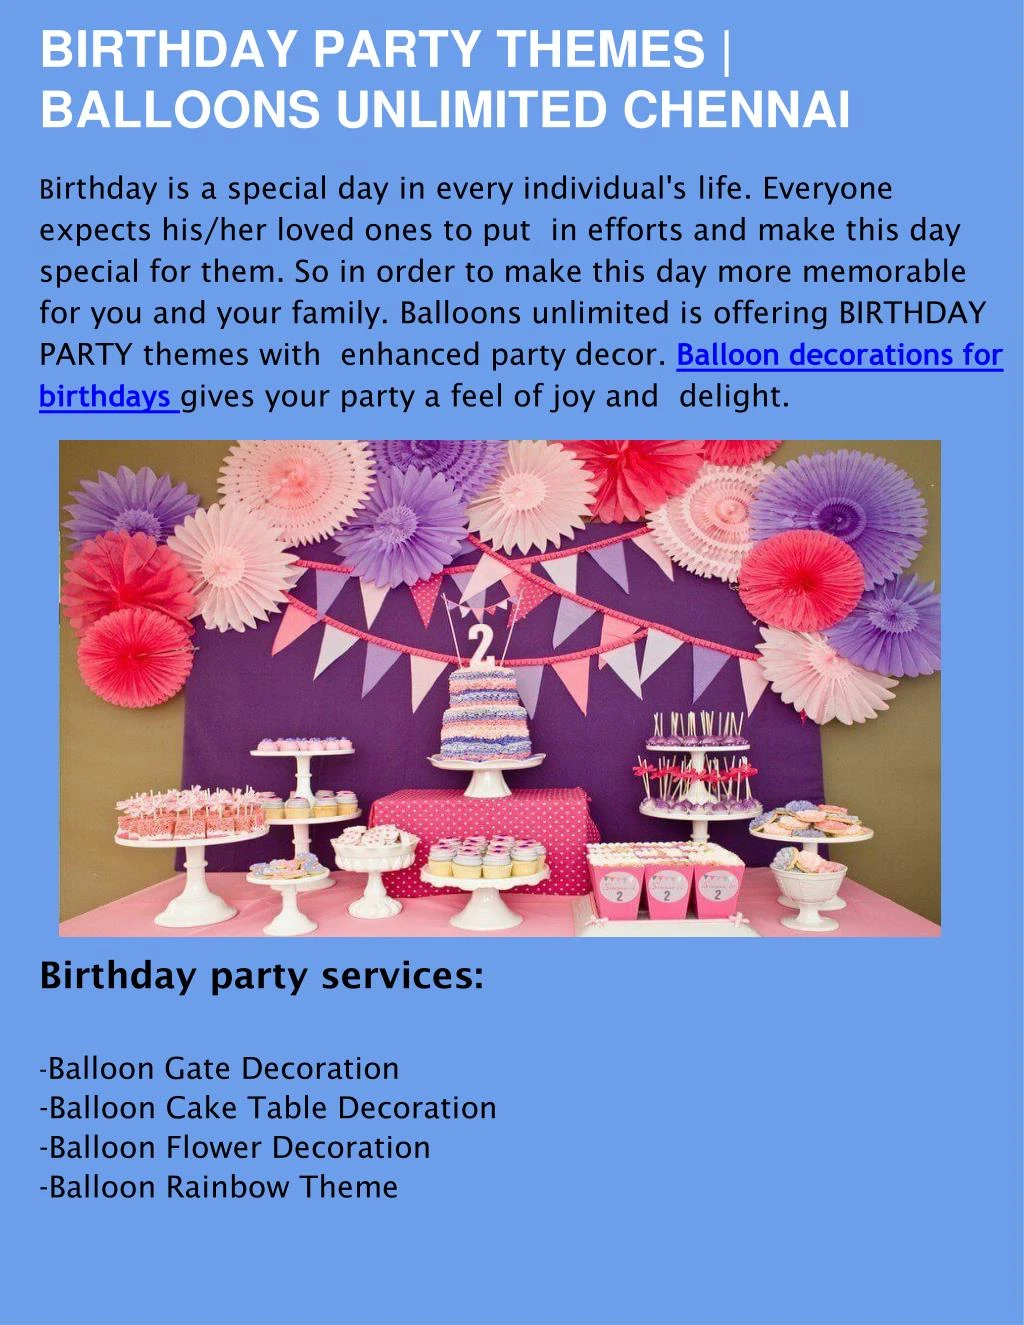 birthday party themes balloons unlimited chennai